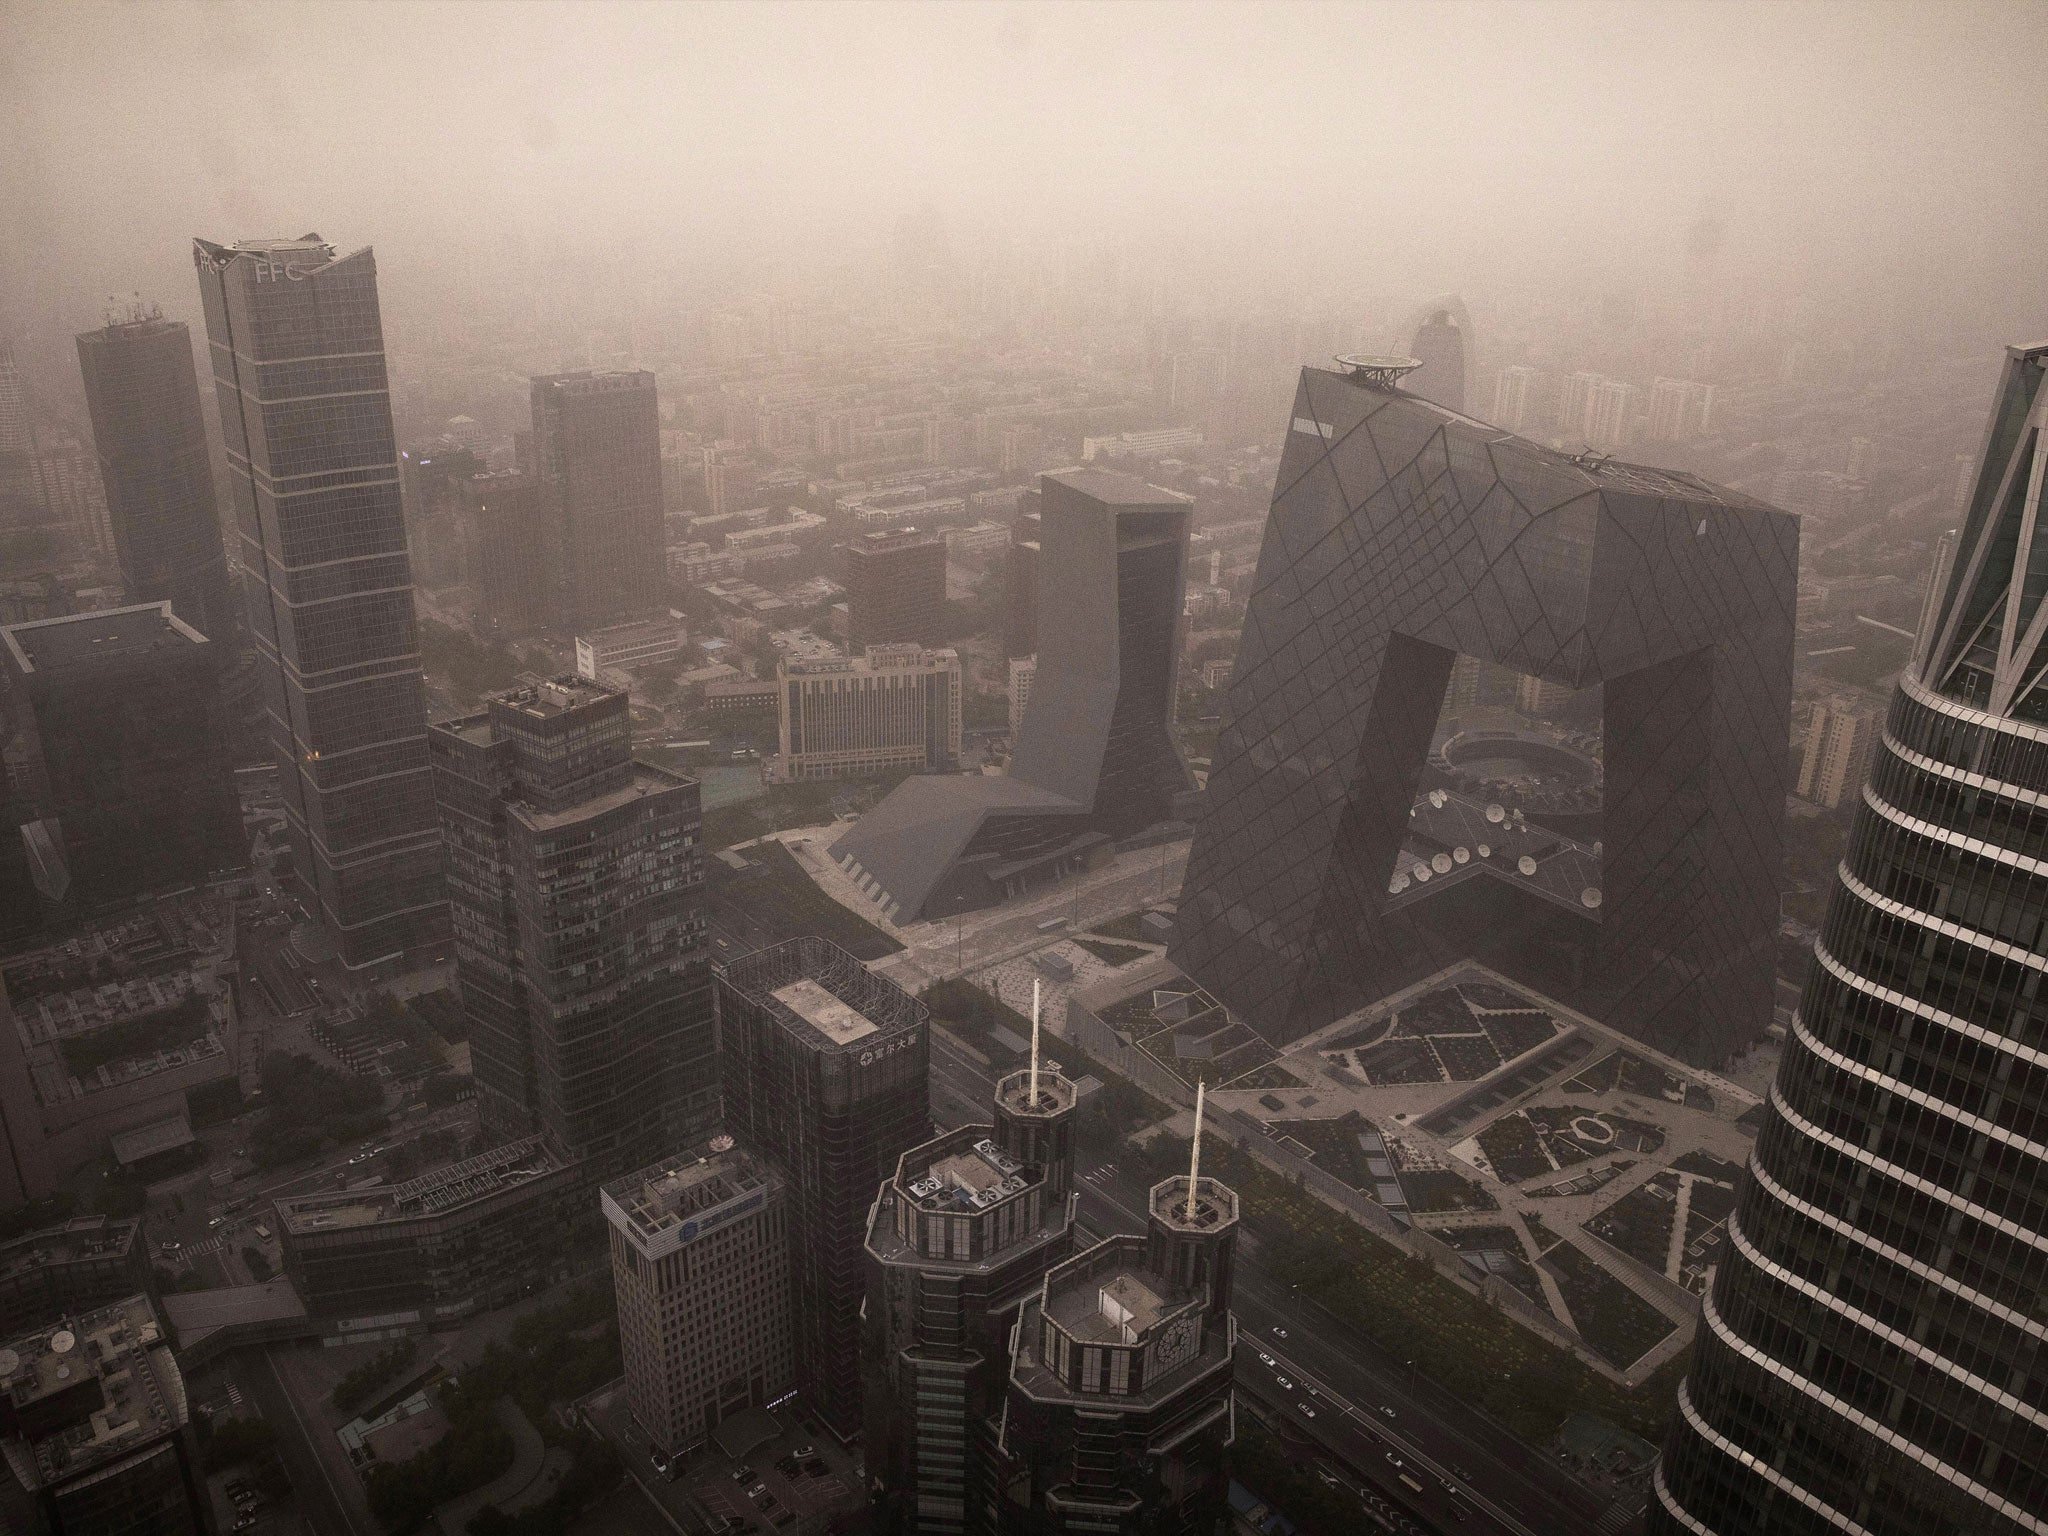 Beijing's Central Business District seen during a sandstorm